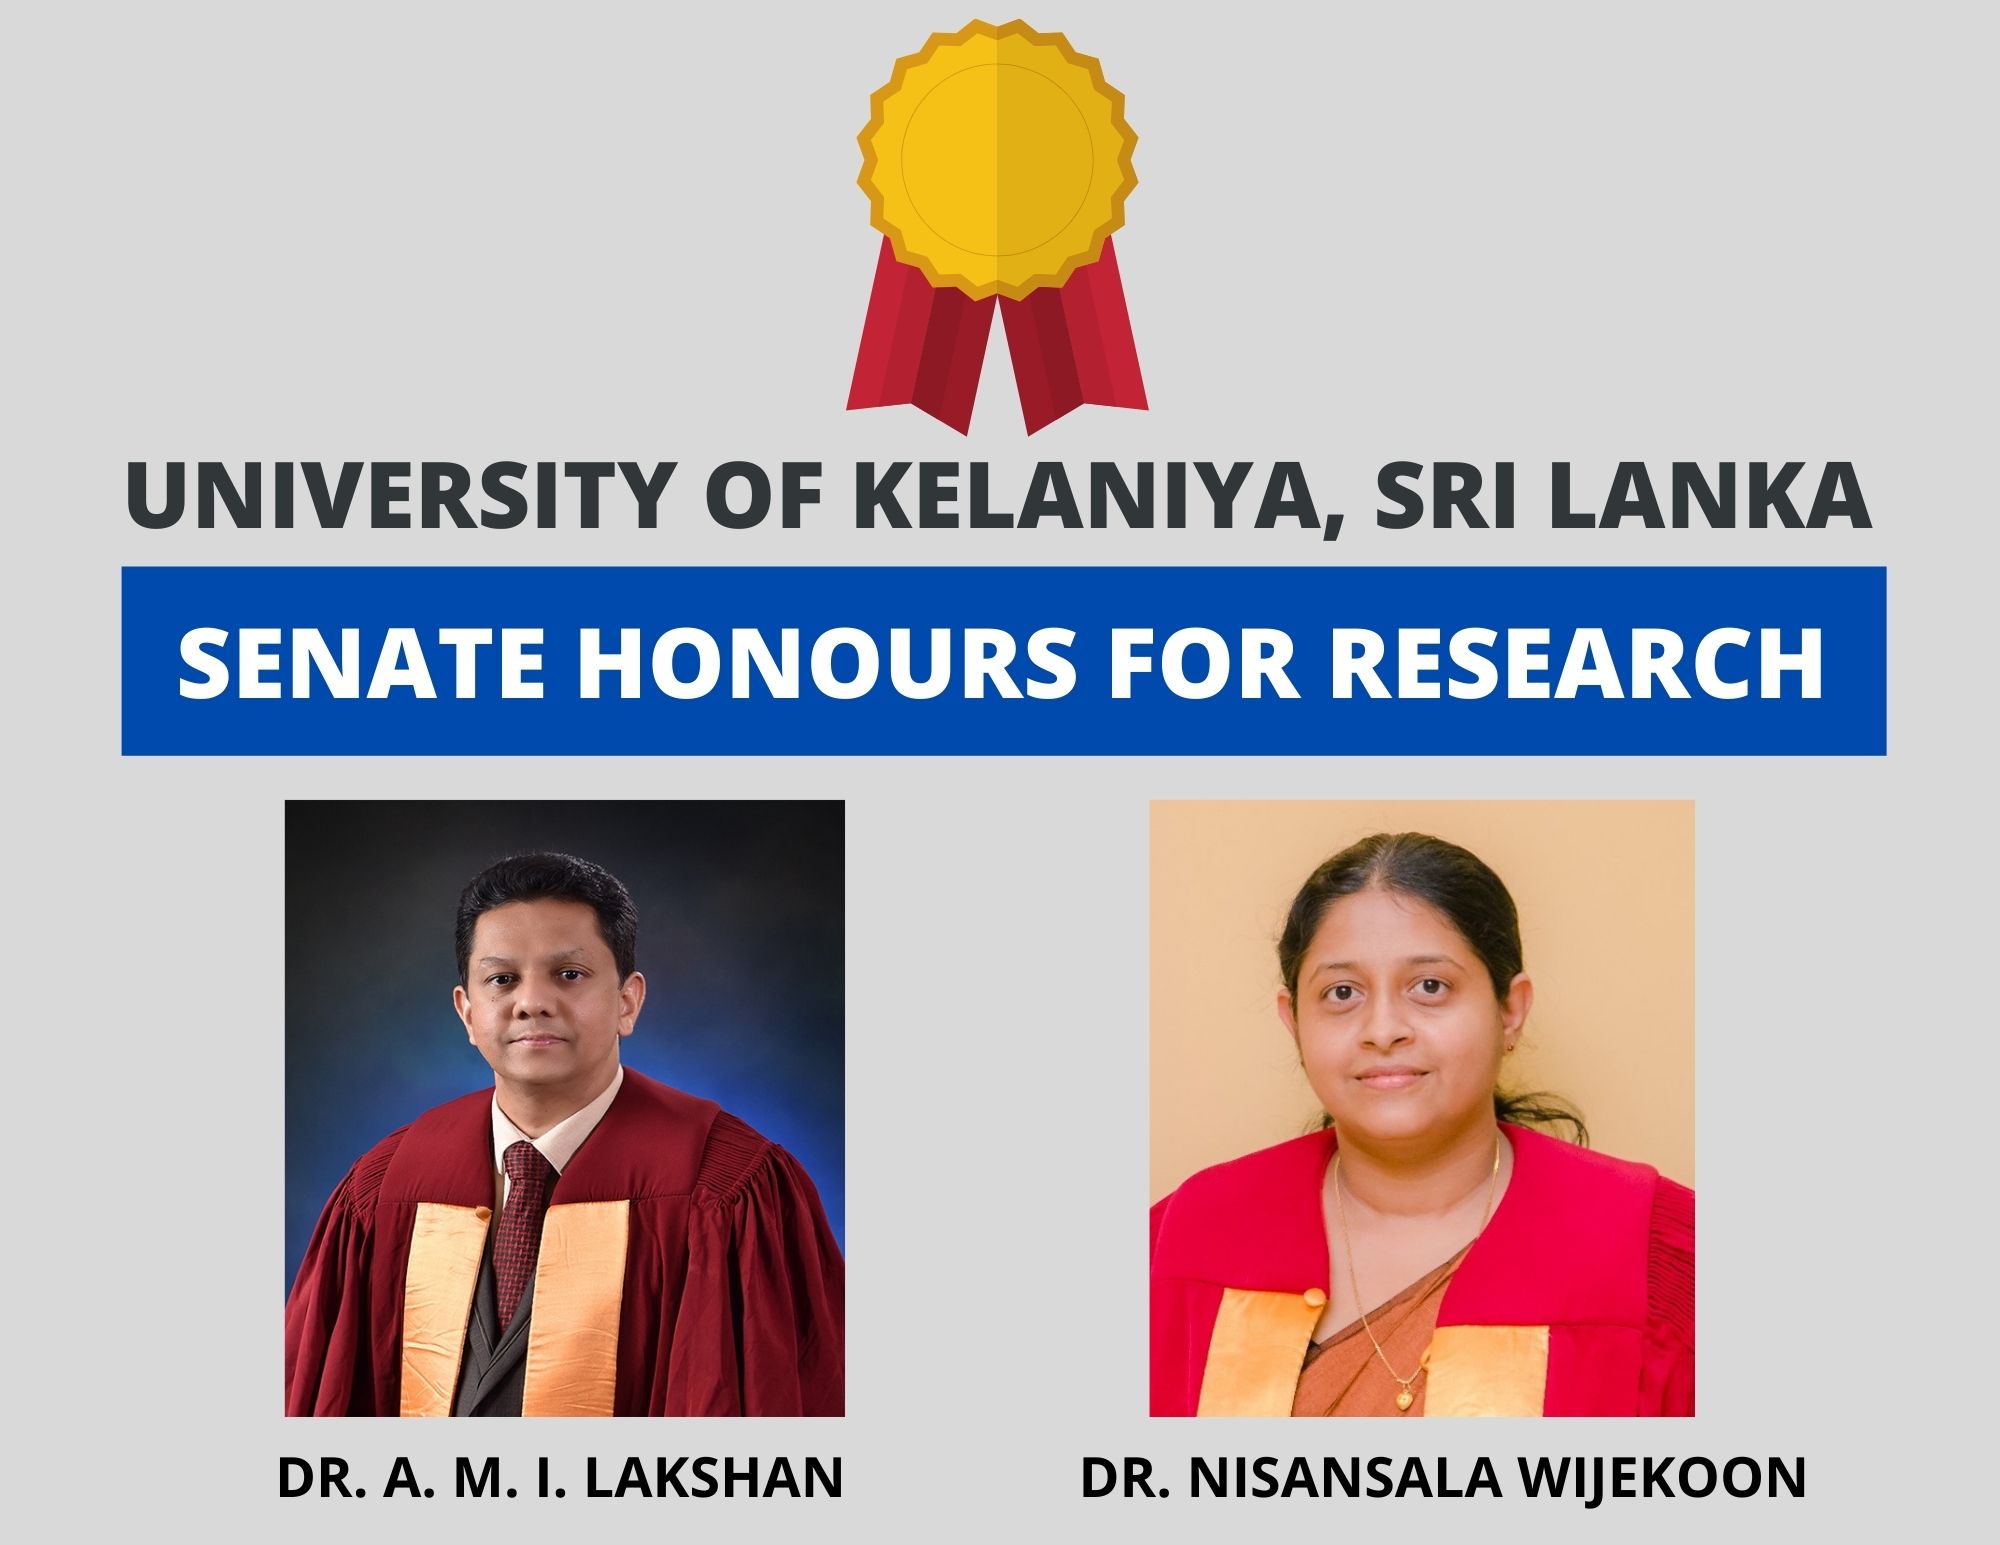 Senate honours for research